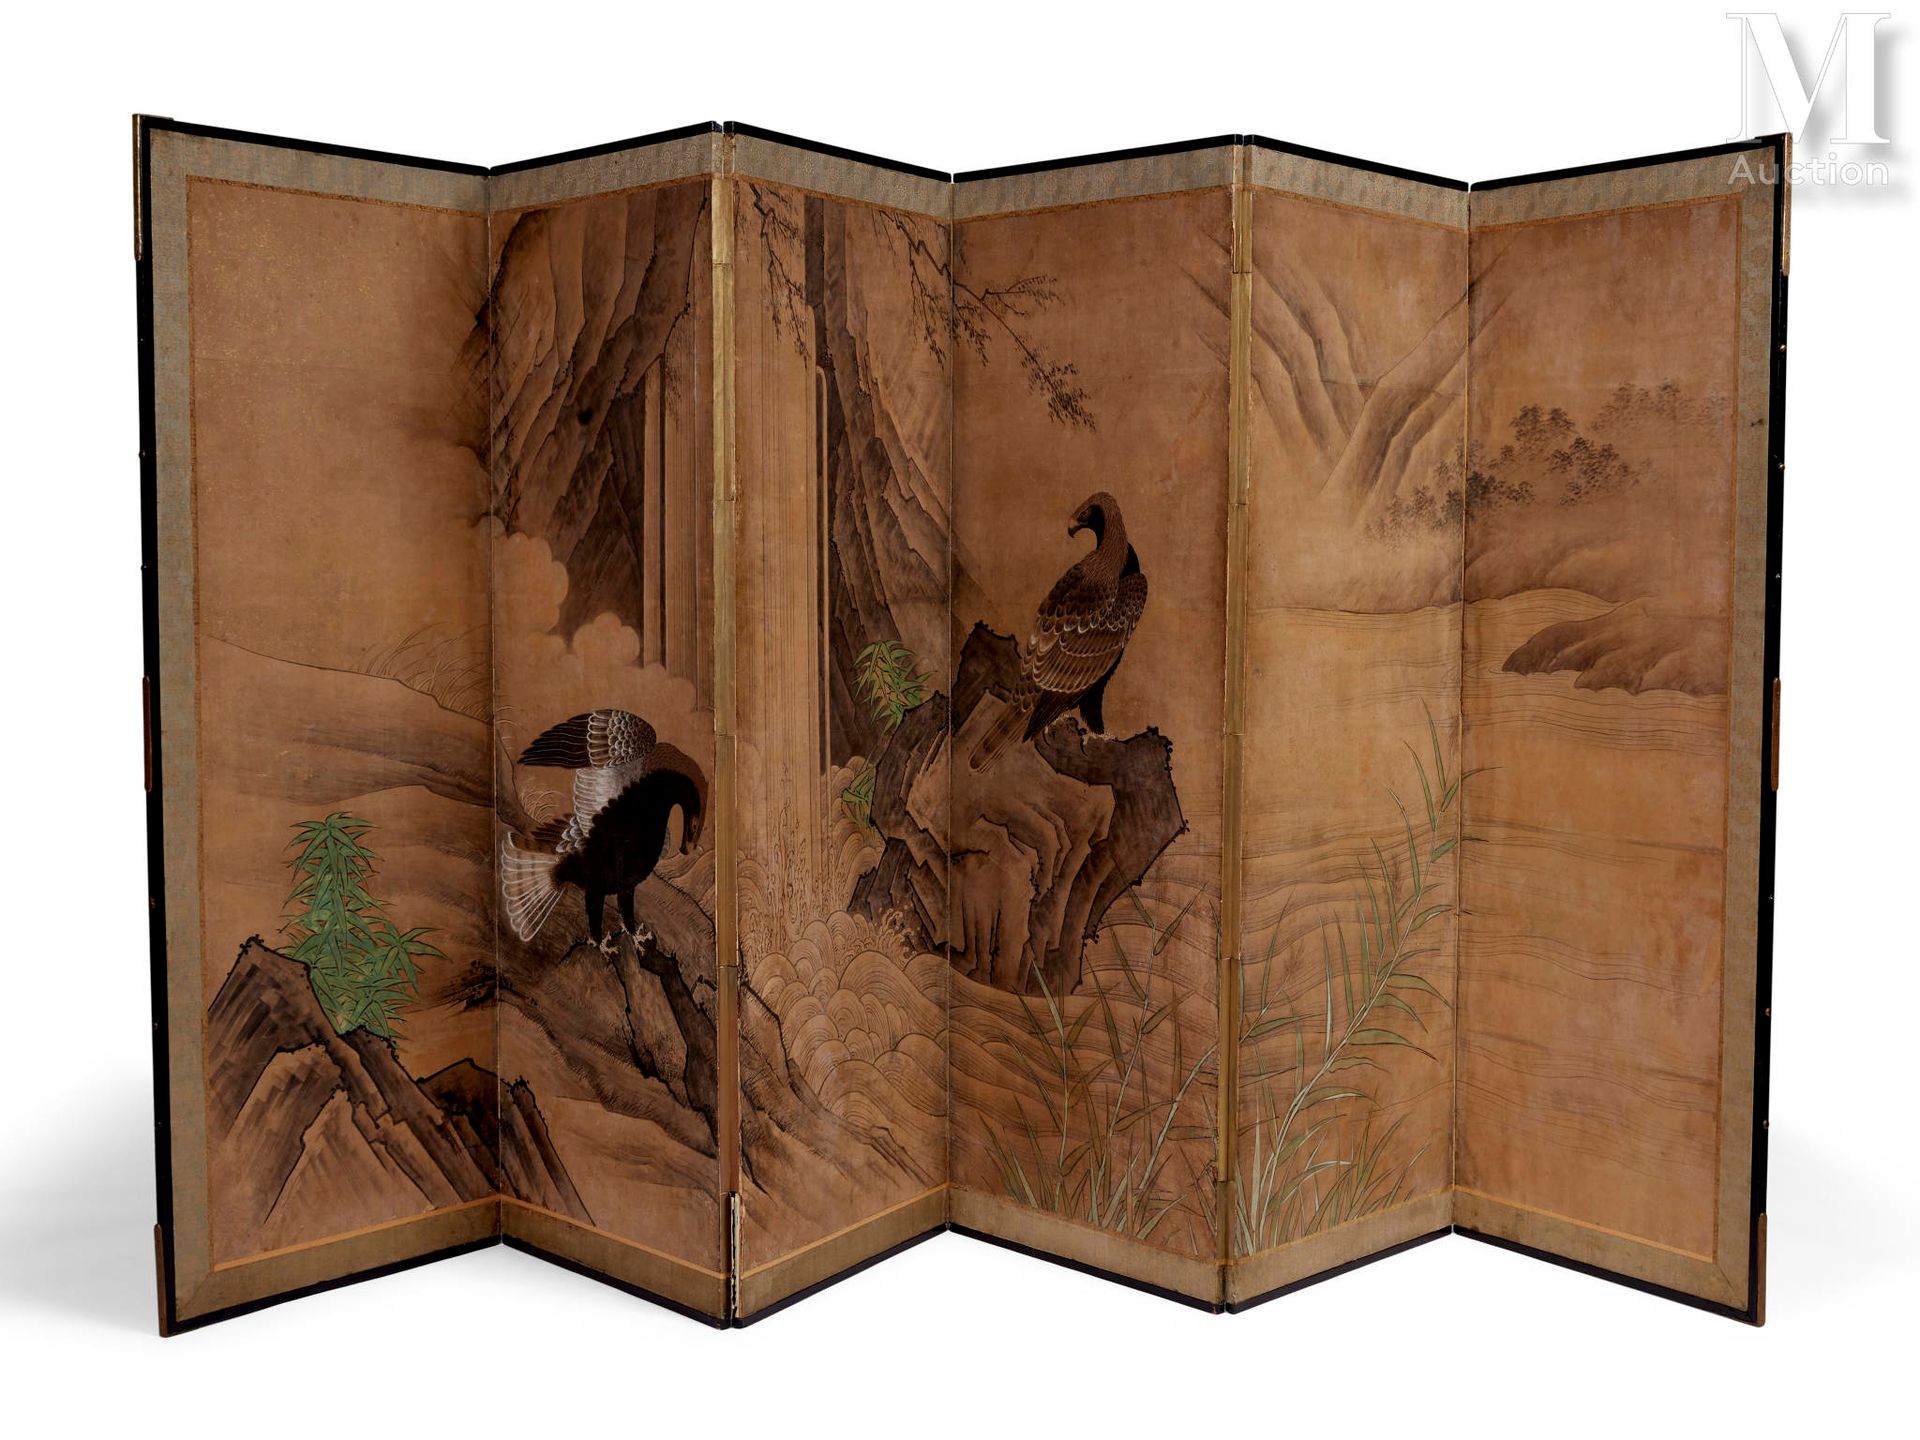 JAPON, fin du XVIIIe siècle 六叶折叠式屏幕

带有优雅的彩绘装饰，在瀑布附近有两只捕食鸟。
高度：172厘米
宽度（叶子）：63厘米